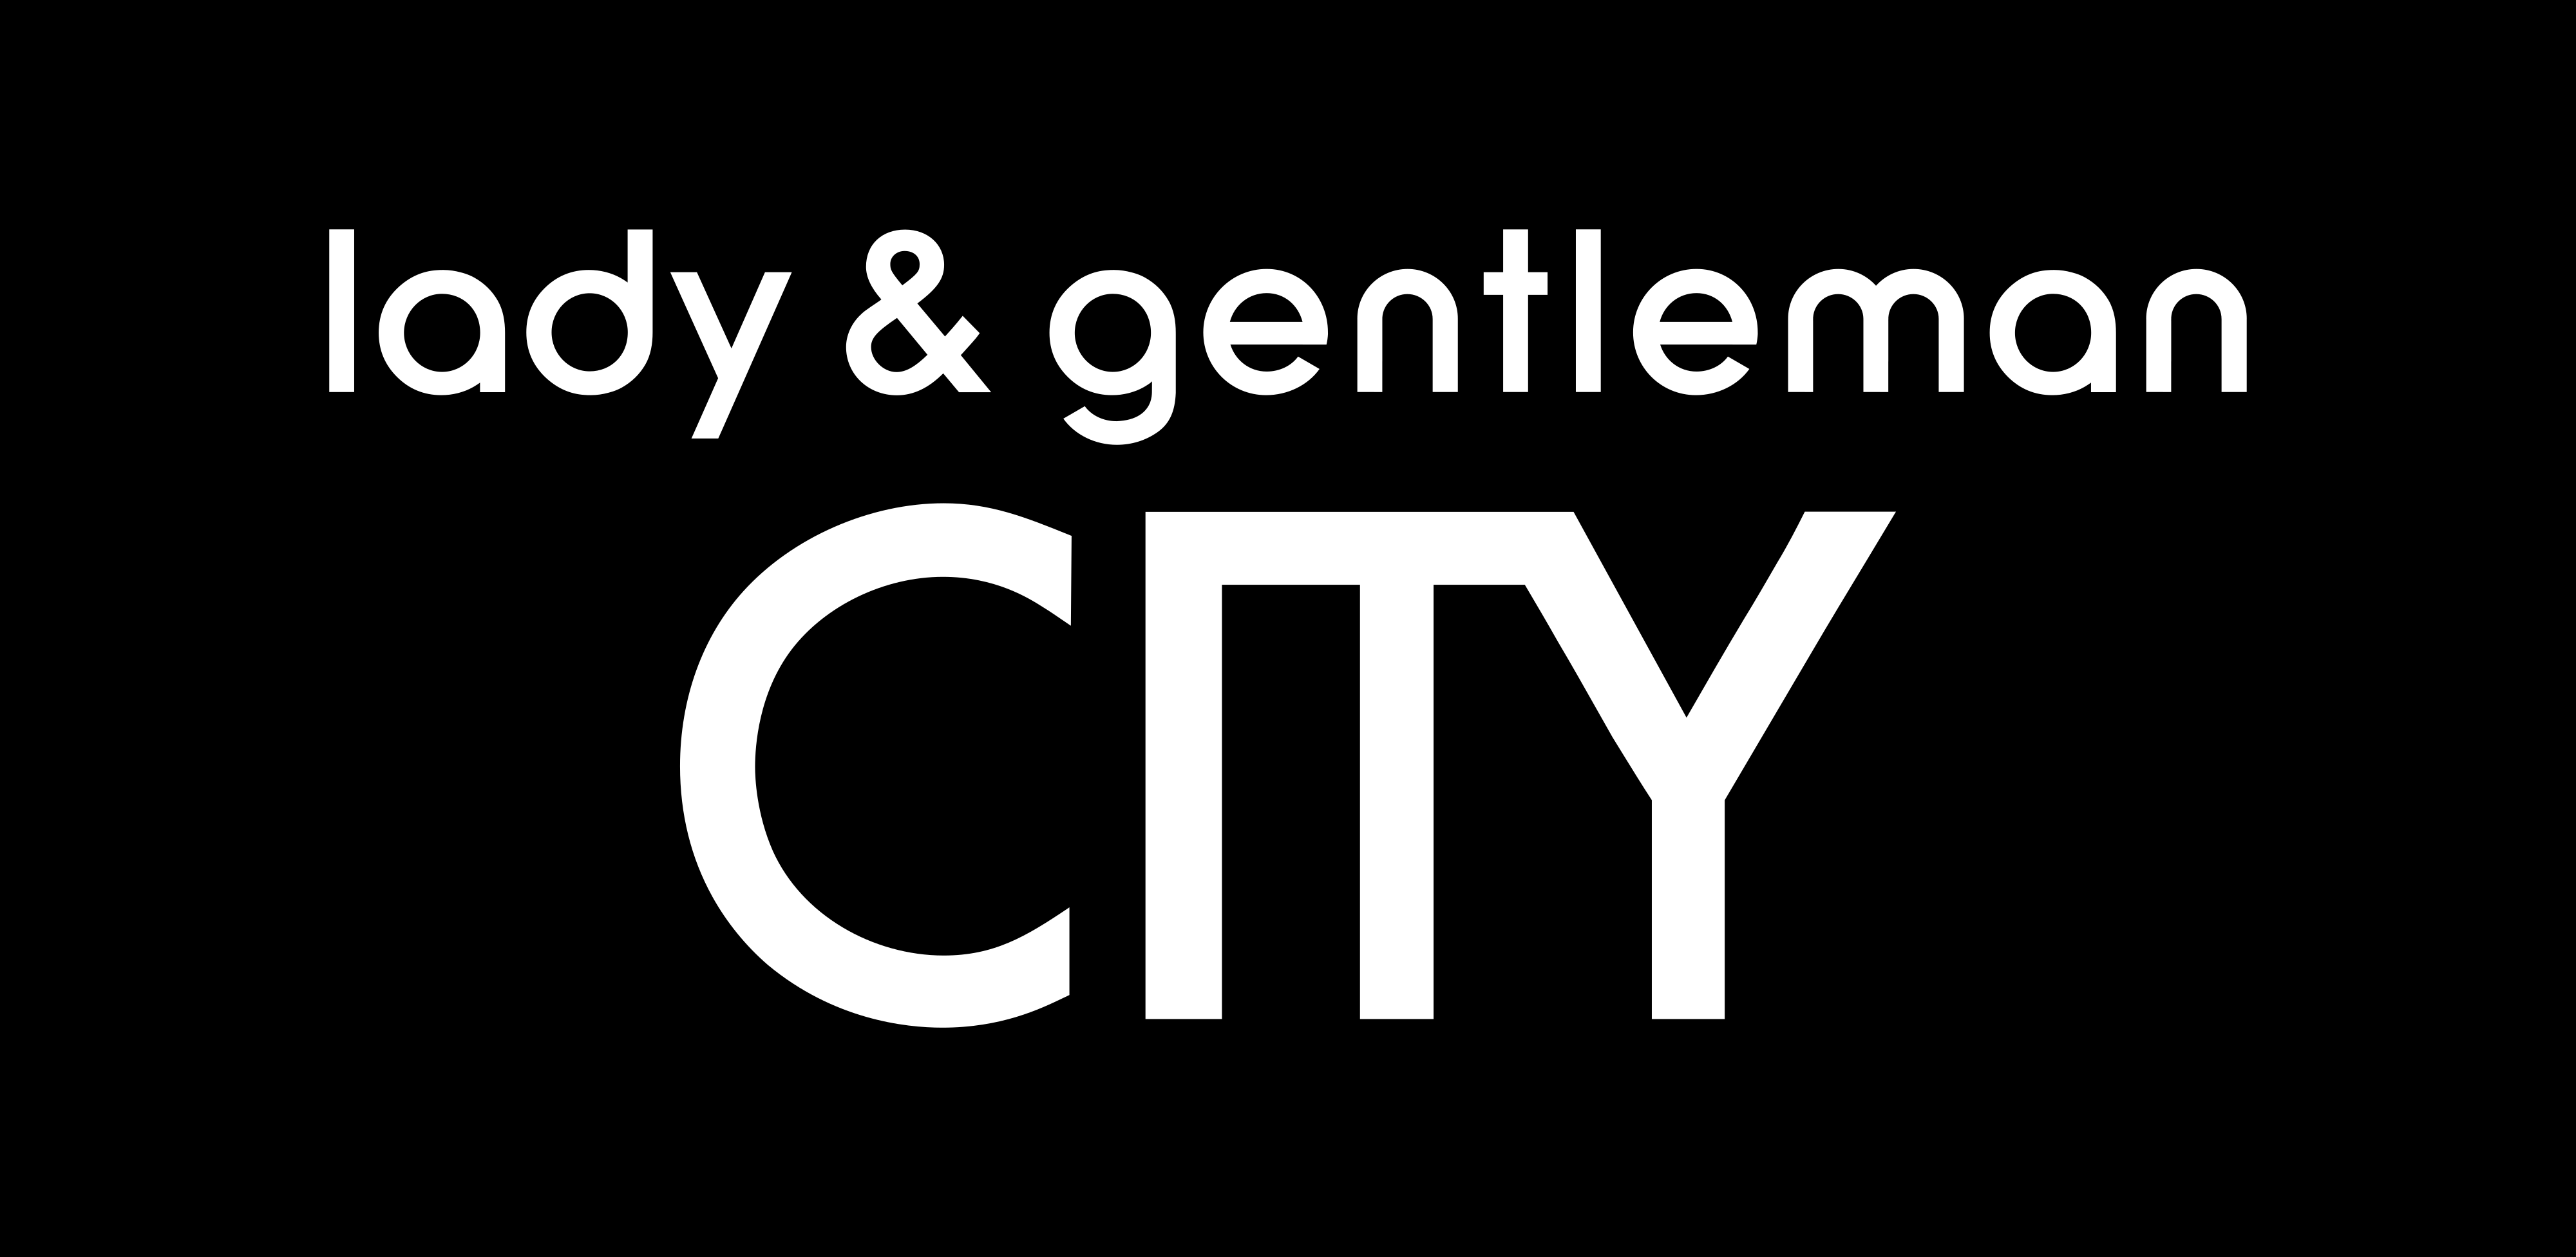 Lady Gentleman City логотип. Леди и джентльмен интернет магазин лого. Lady and Gentleman магазин одежды лого. Леди и джентльмен Сити лого одежда.